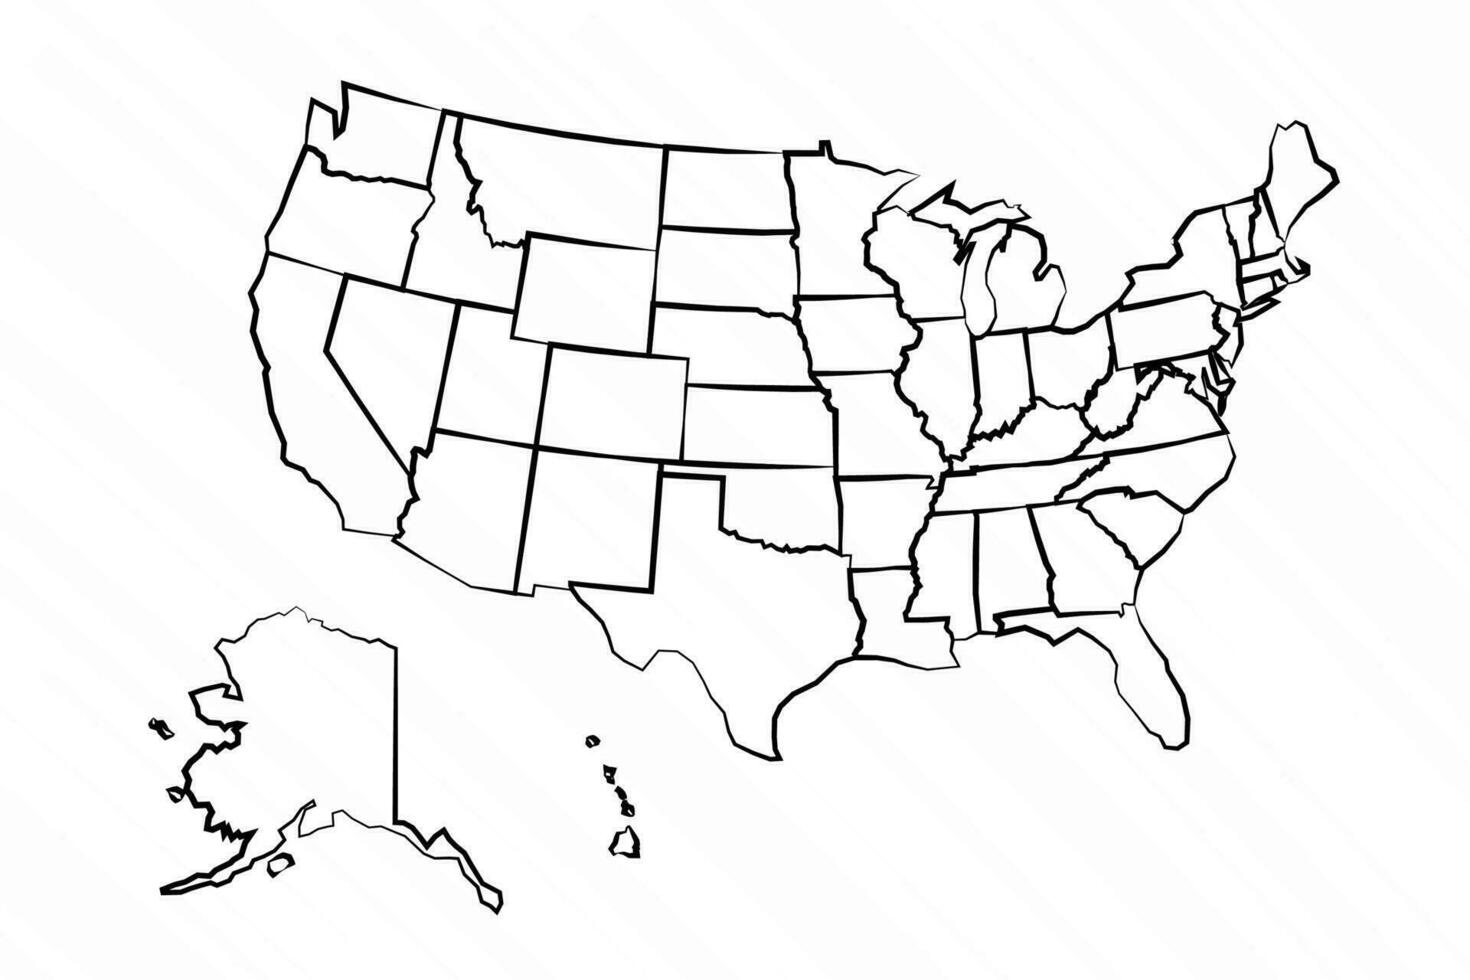 Hand Drawn USA Map Illustration vector